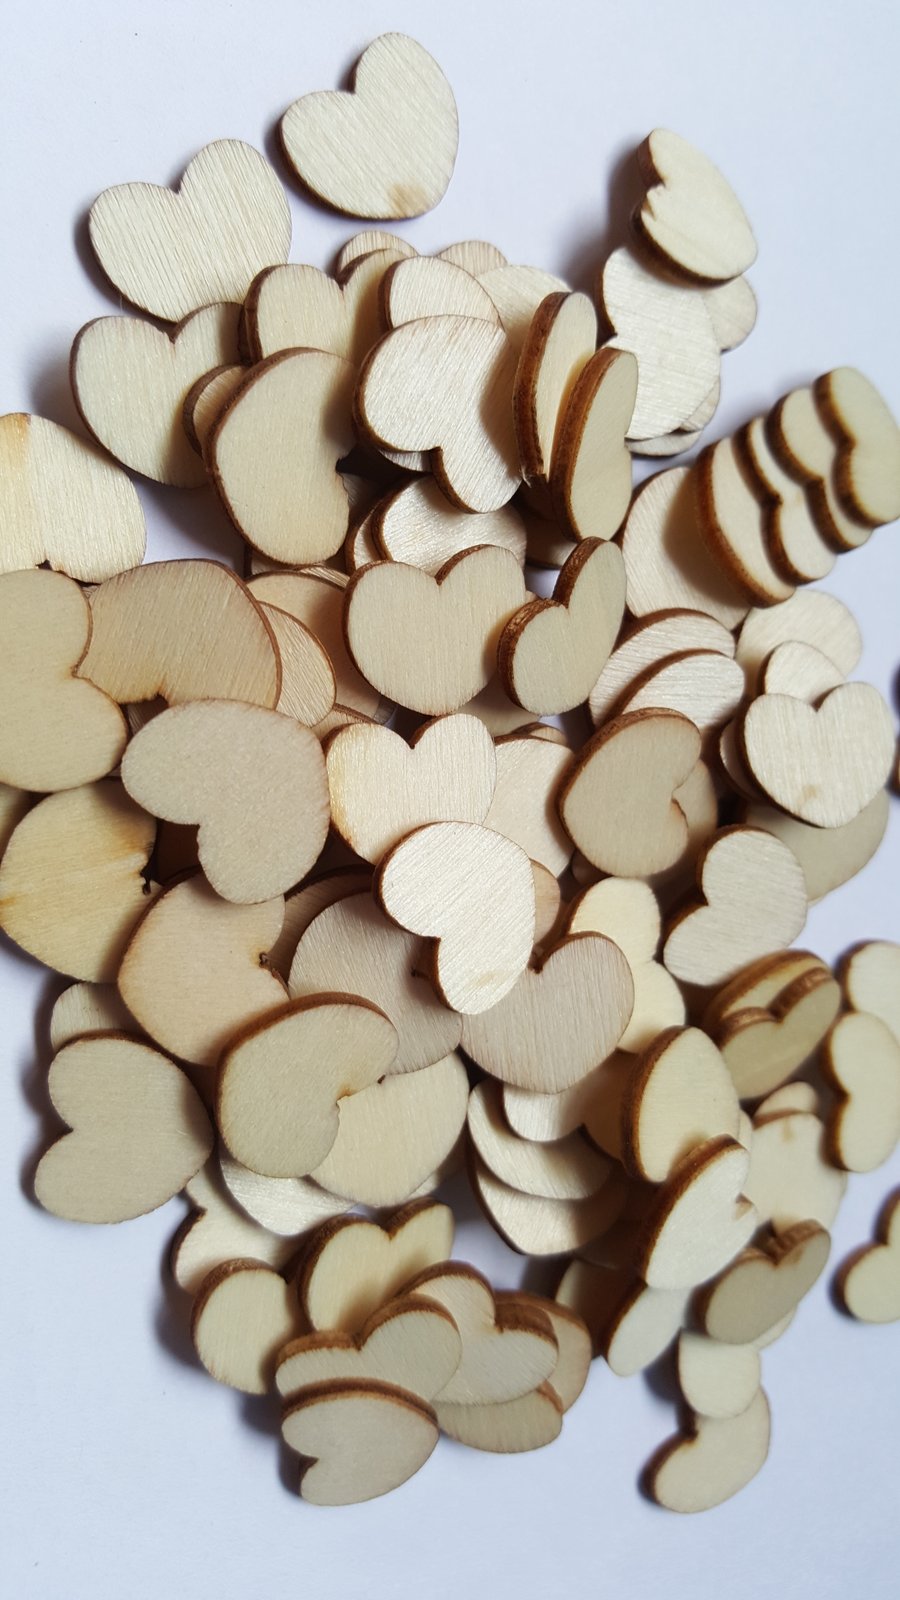 30 x Mini Wooden Shapes - 15mm - Heart 